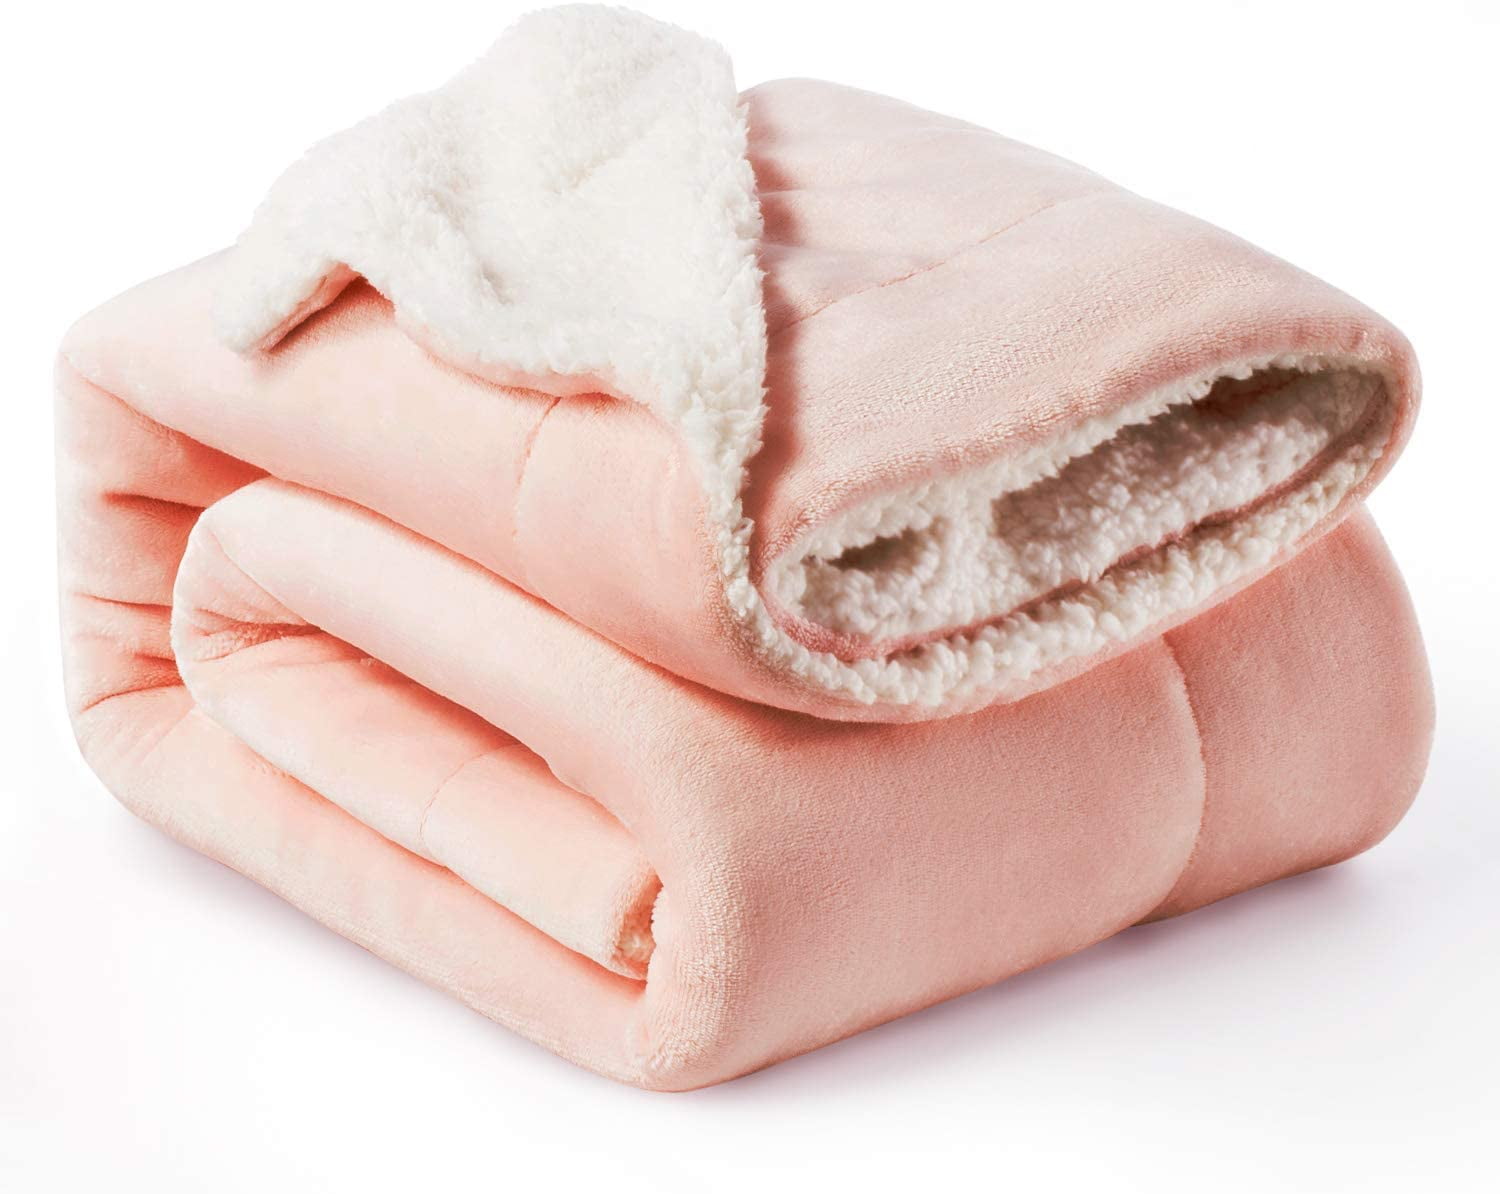 Bedsure Sherpa Fleece Blanket Twin Size Dusty Pink Plush Blanket Fuzzy Soft Blanket Microfiber Walmartcom Walmartcom